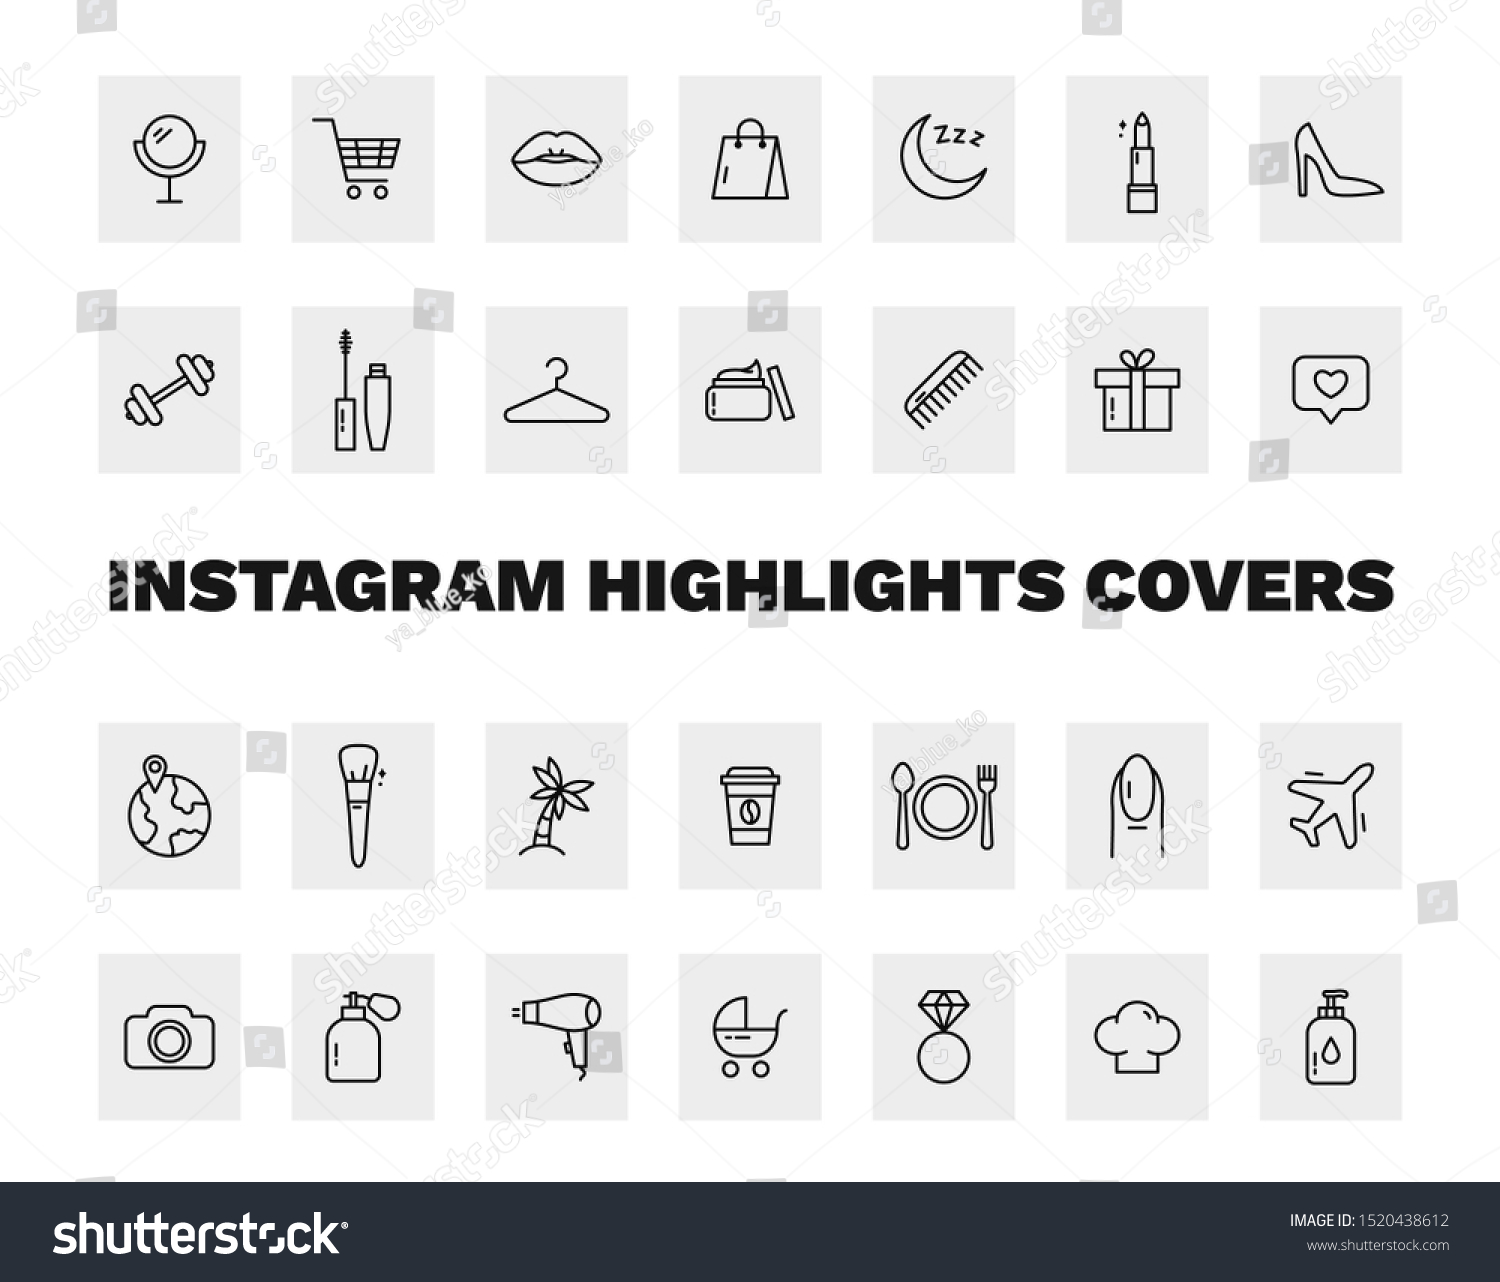 Instagramのハイライト表示アイコン Instagramストーリーのアイコンセット ベクター画像 のベクター画像素材 ロイヤリティフリー